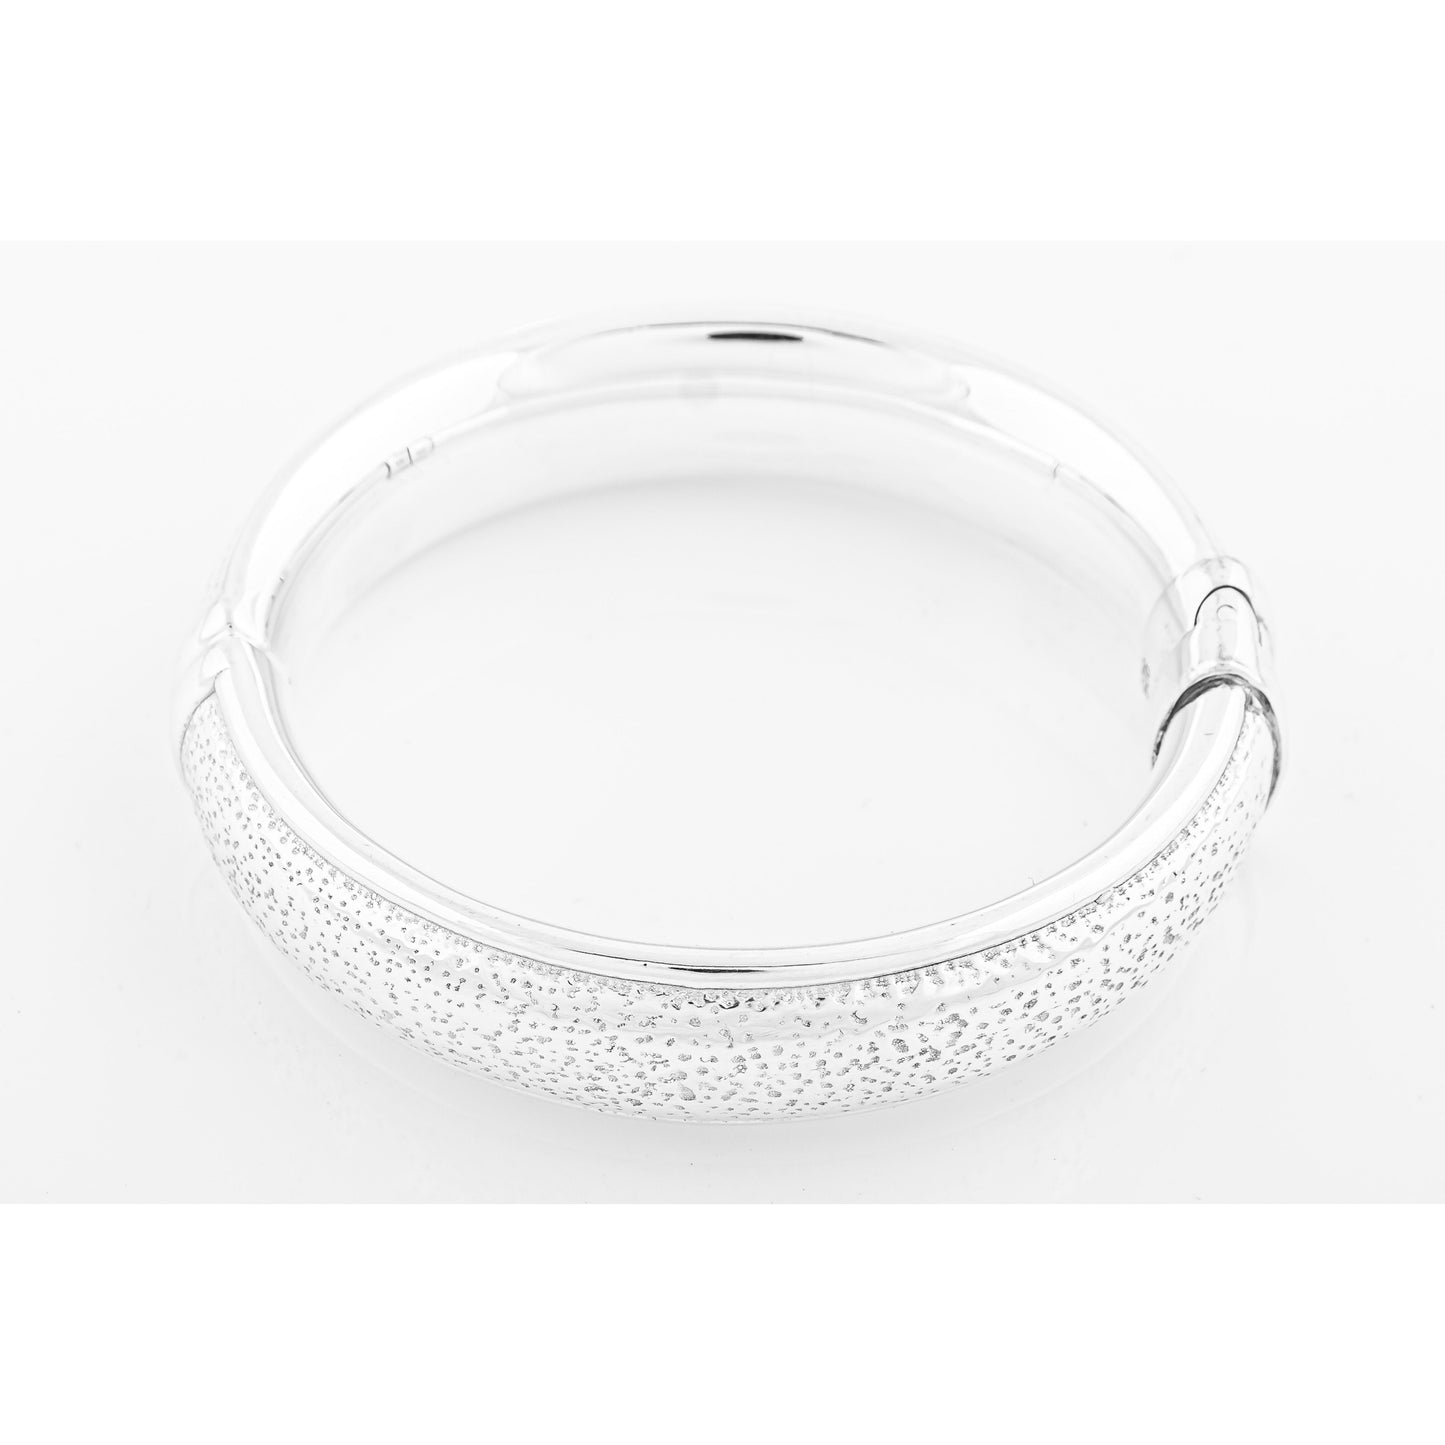 Silver bracelet on white background.